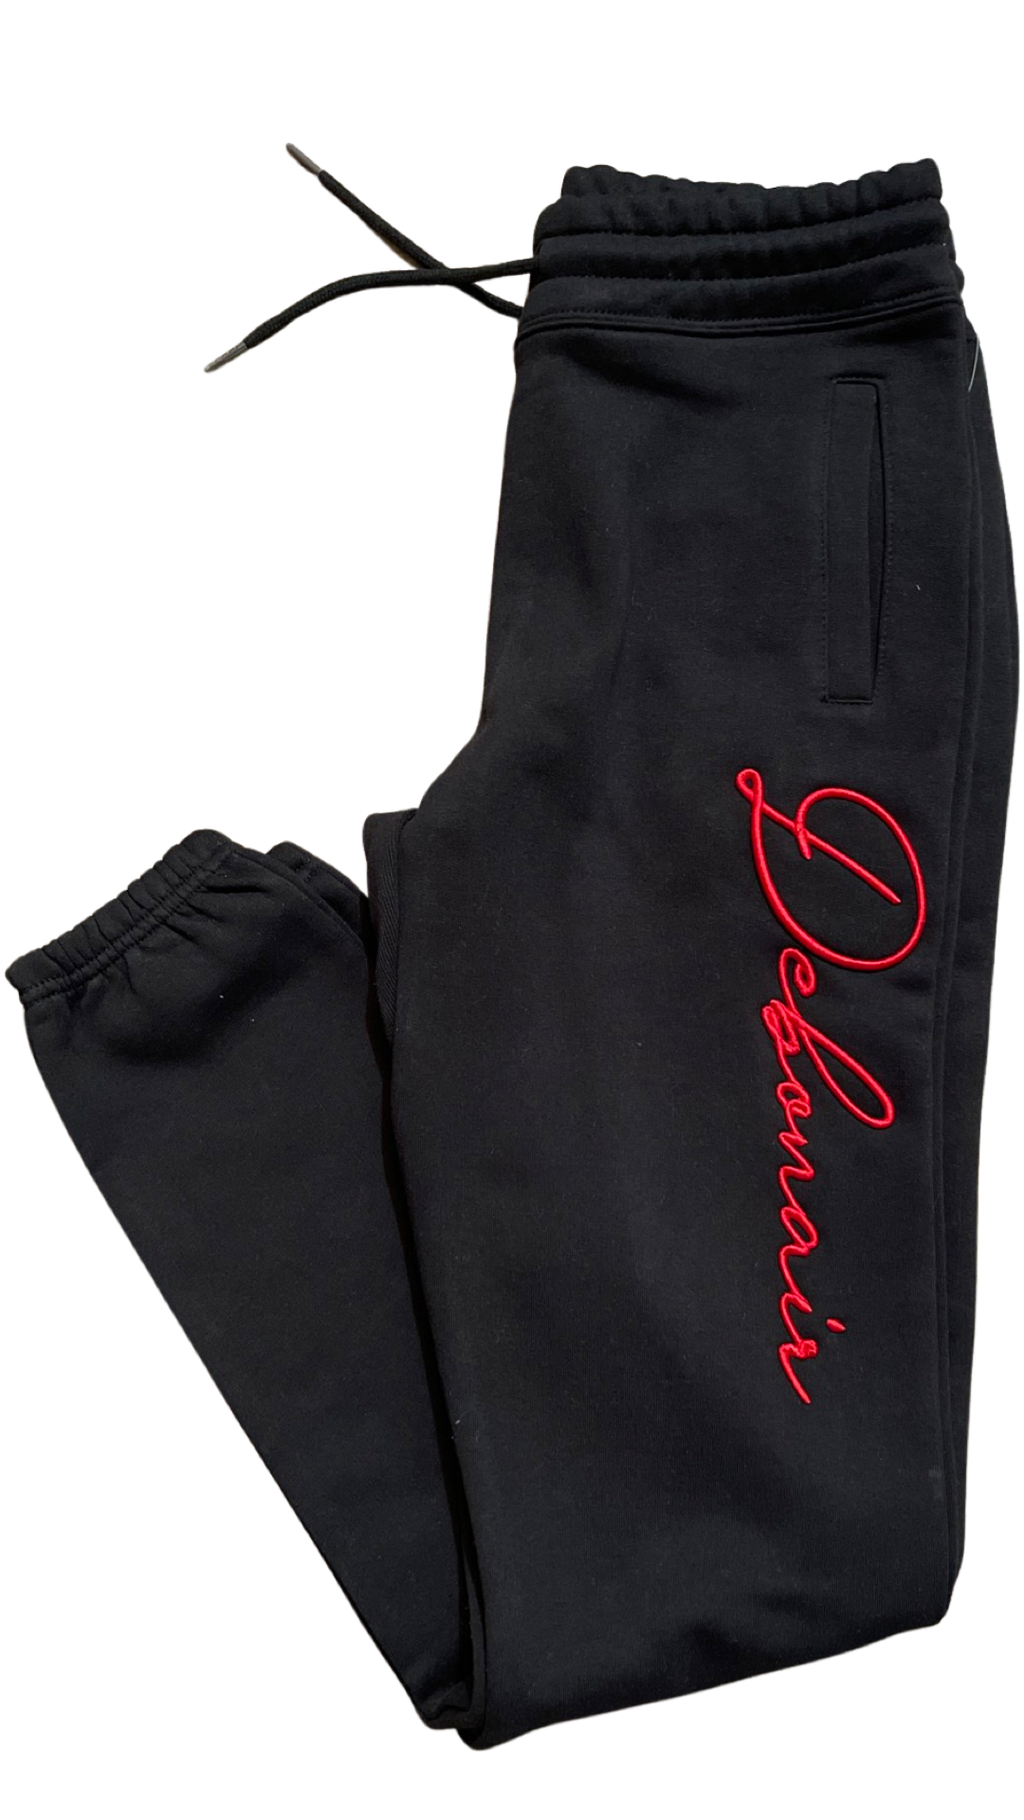 Debonair “BRED” Embroidered Sweatpants